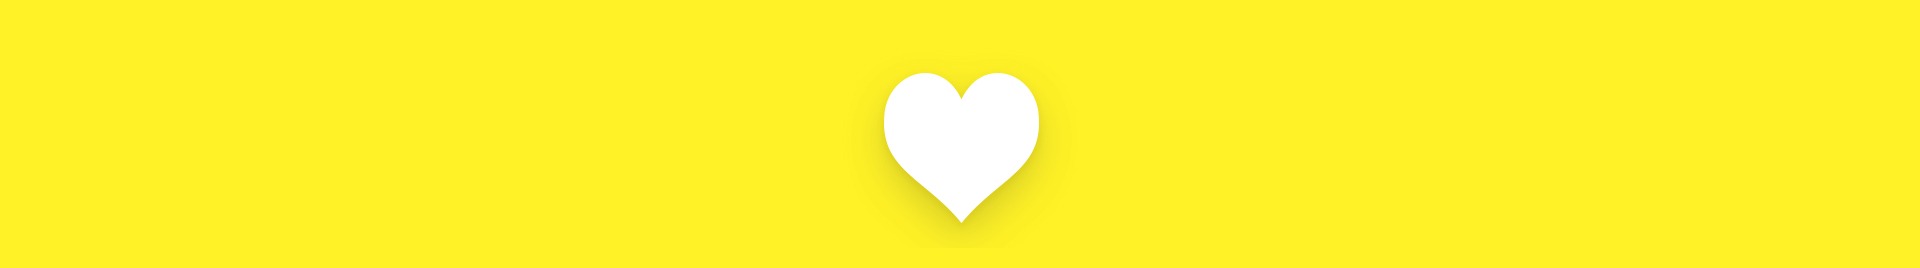 love_yellow_back